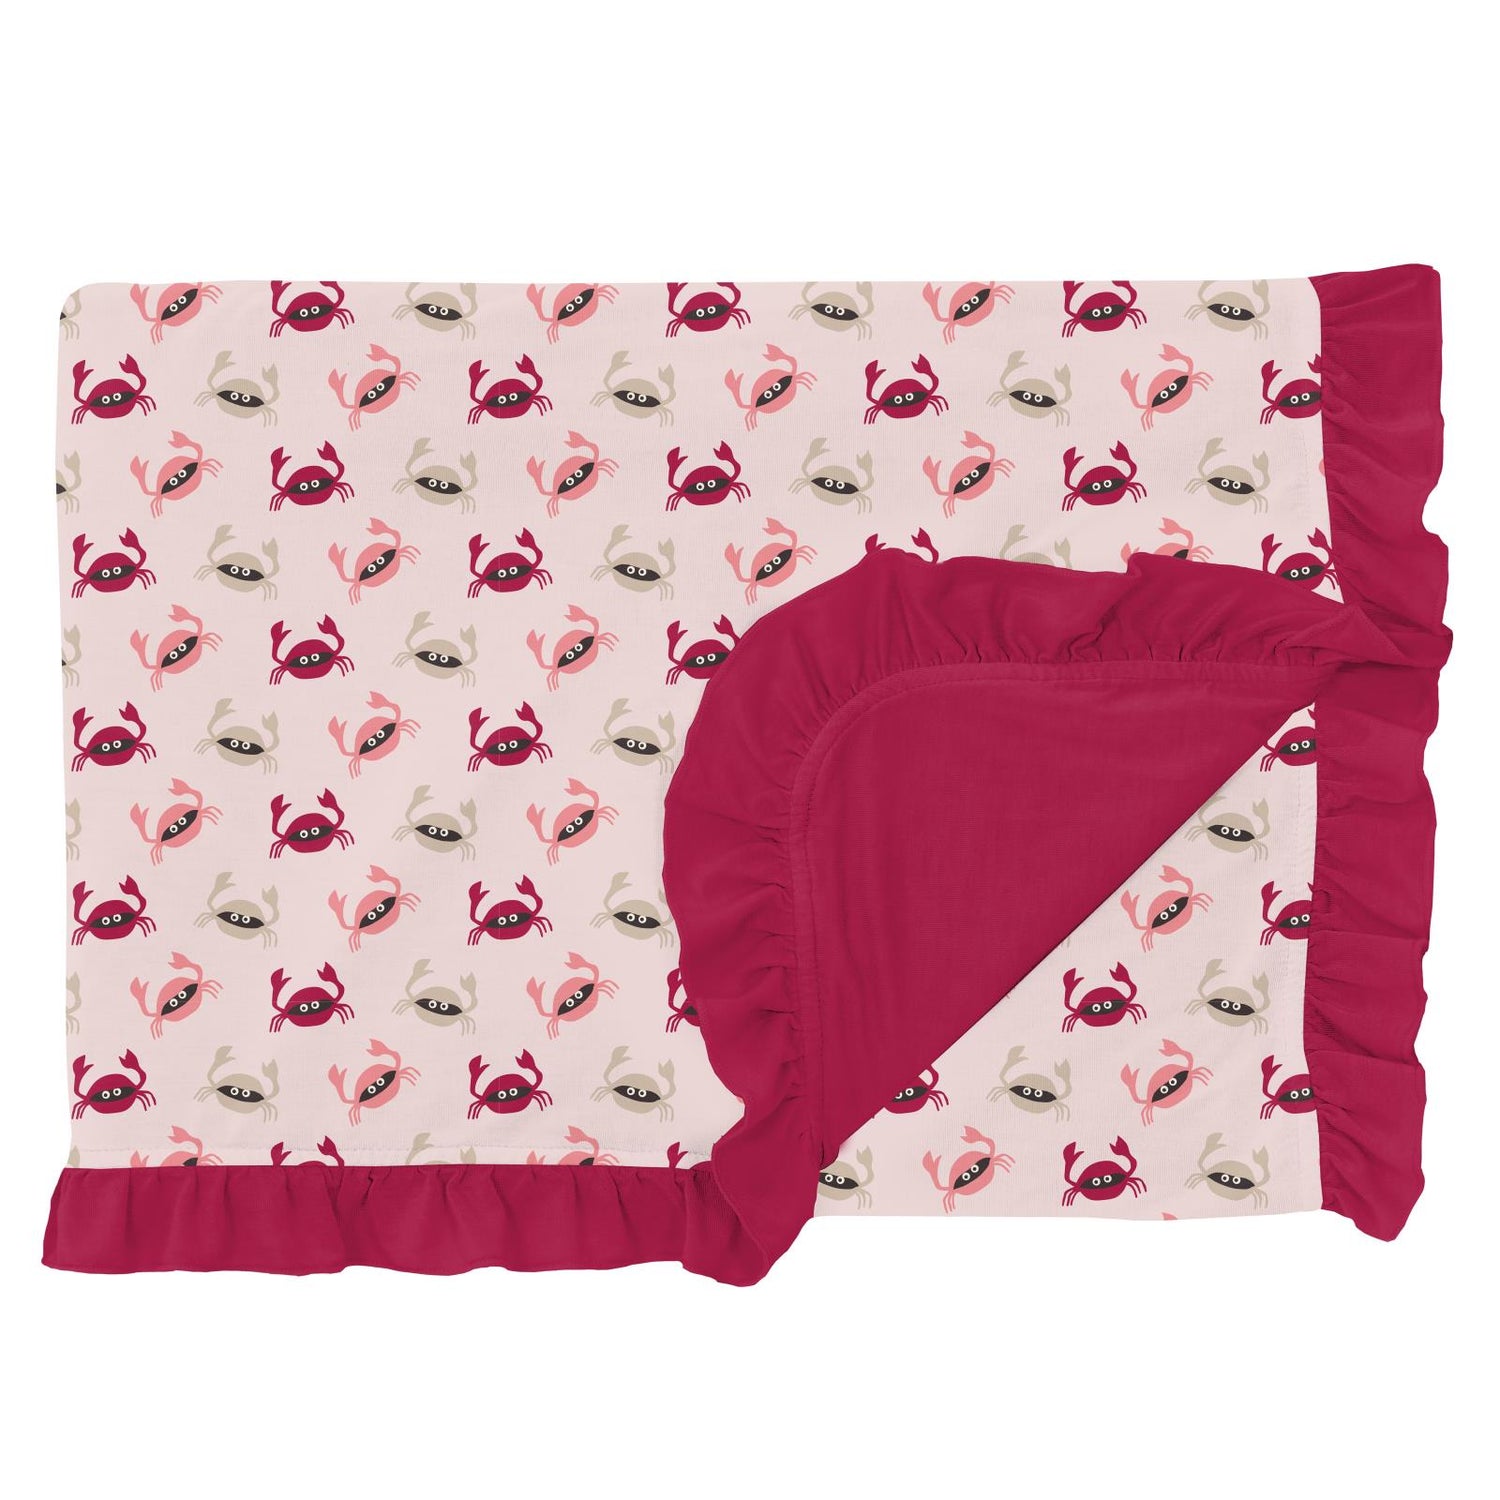 Print Ruffle Toddler Blanket in Macaroon Crabs